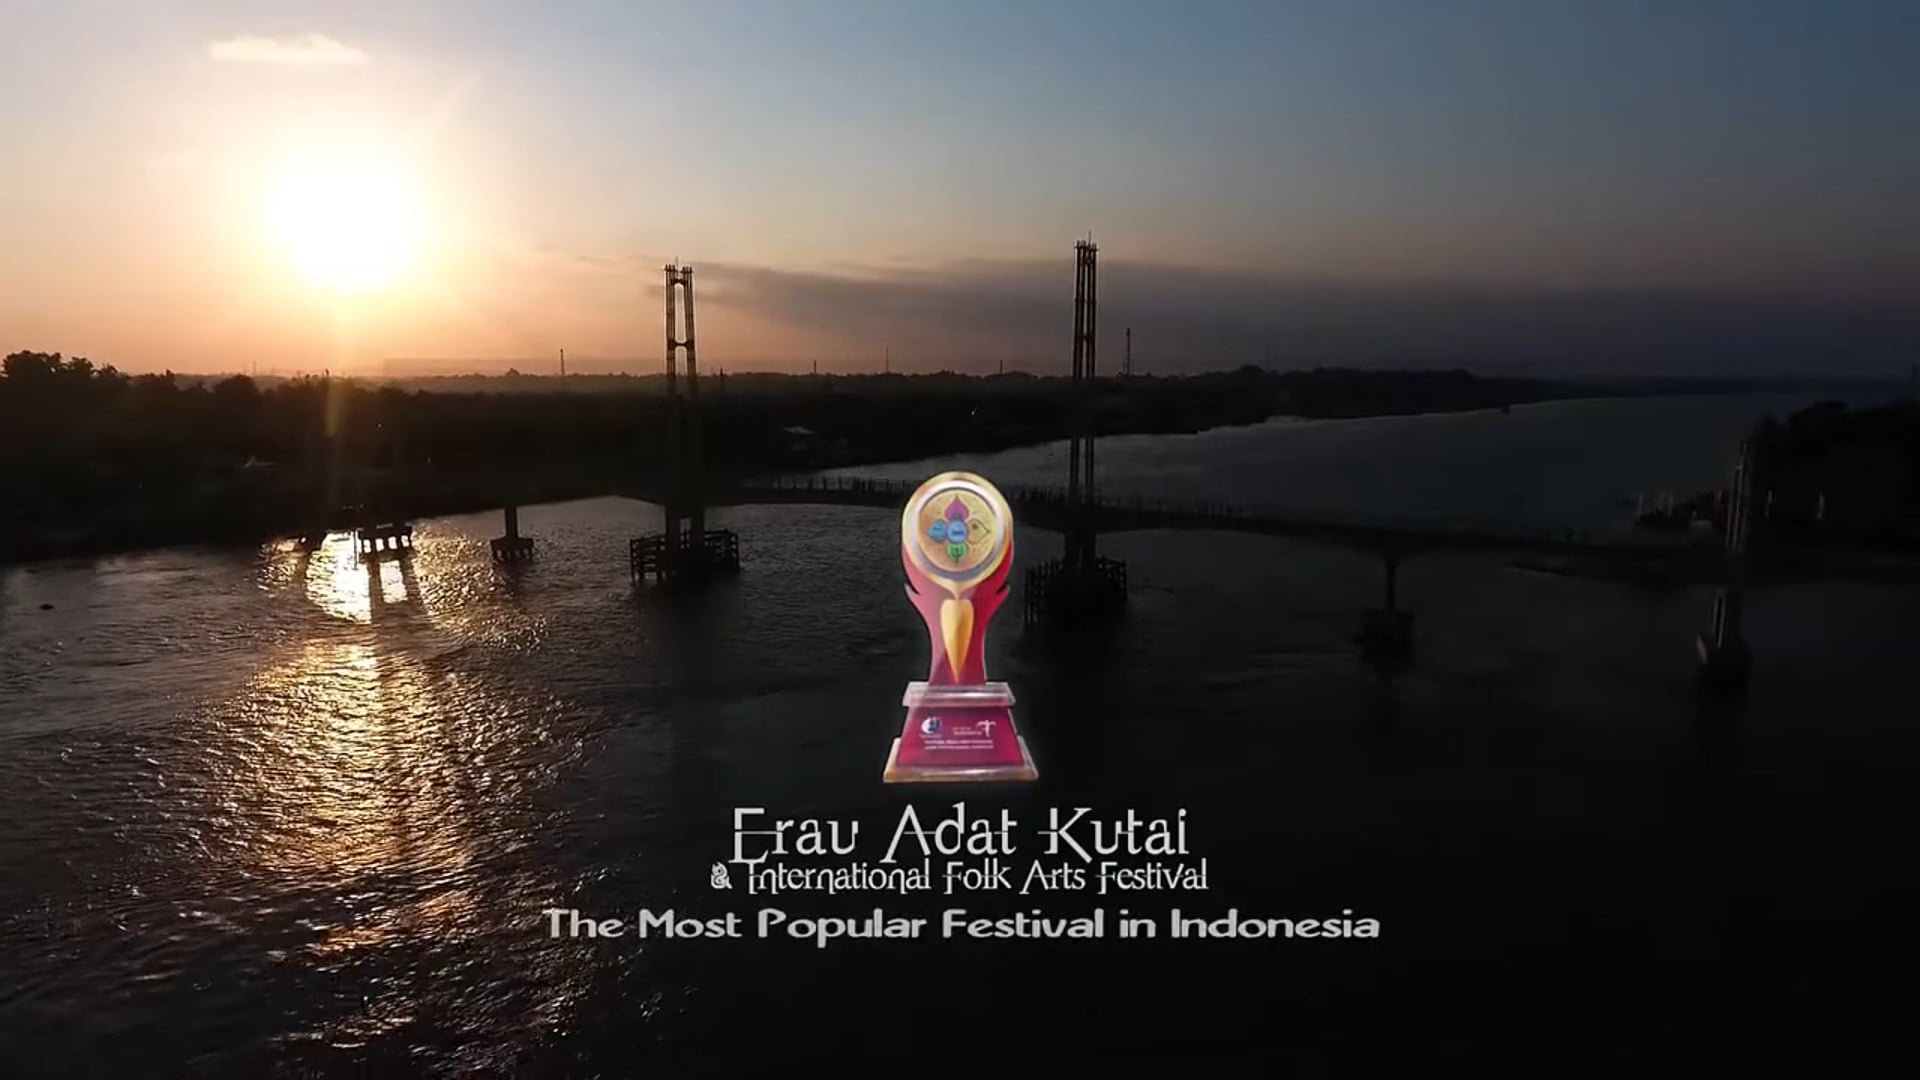 ERAU Adat Kutai & International Folk Arts Festival 2017 Official Aftermovie